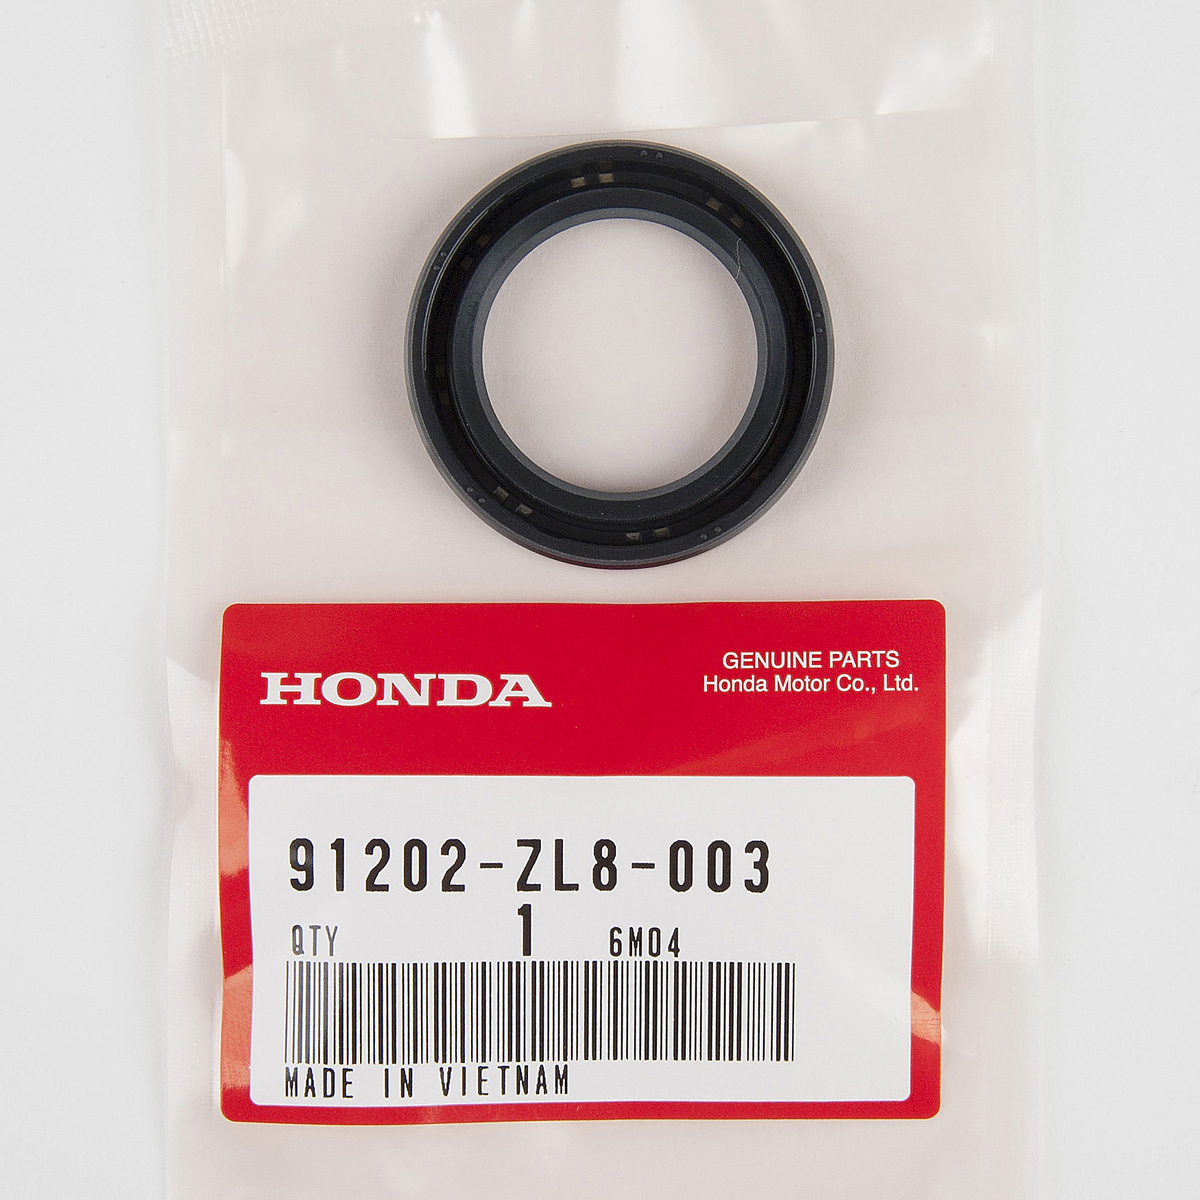 Honda Genuine OEM Honda Oil Seal for Small Engines 91202-ZL8-003 Quantity=1pc